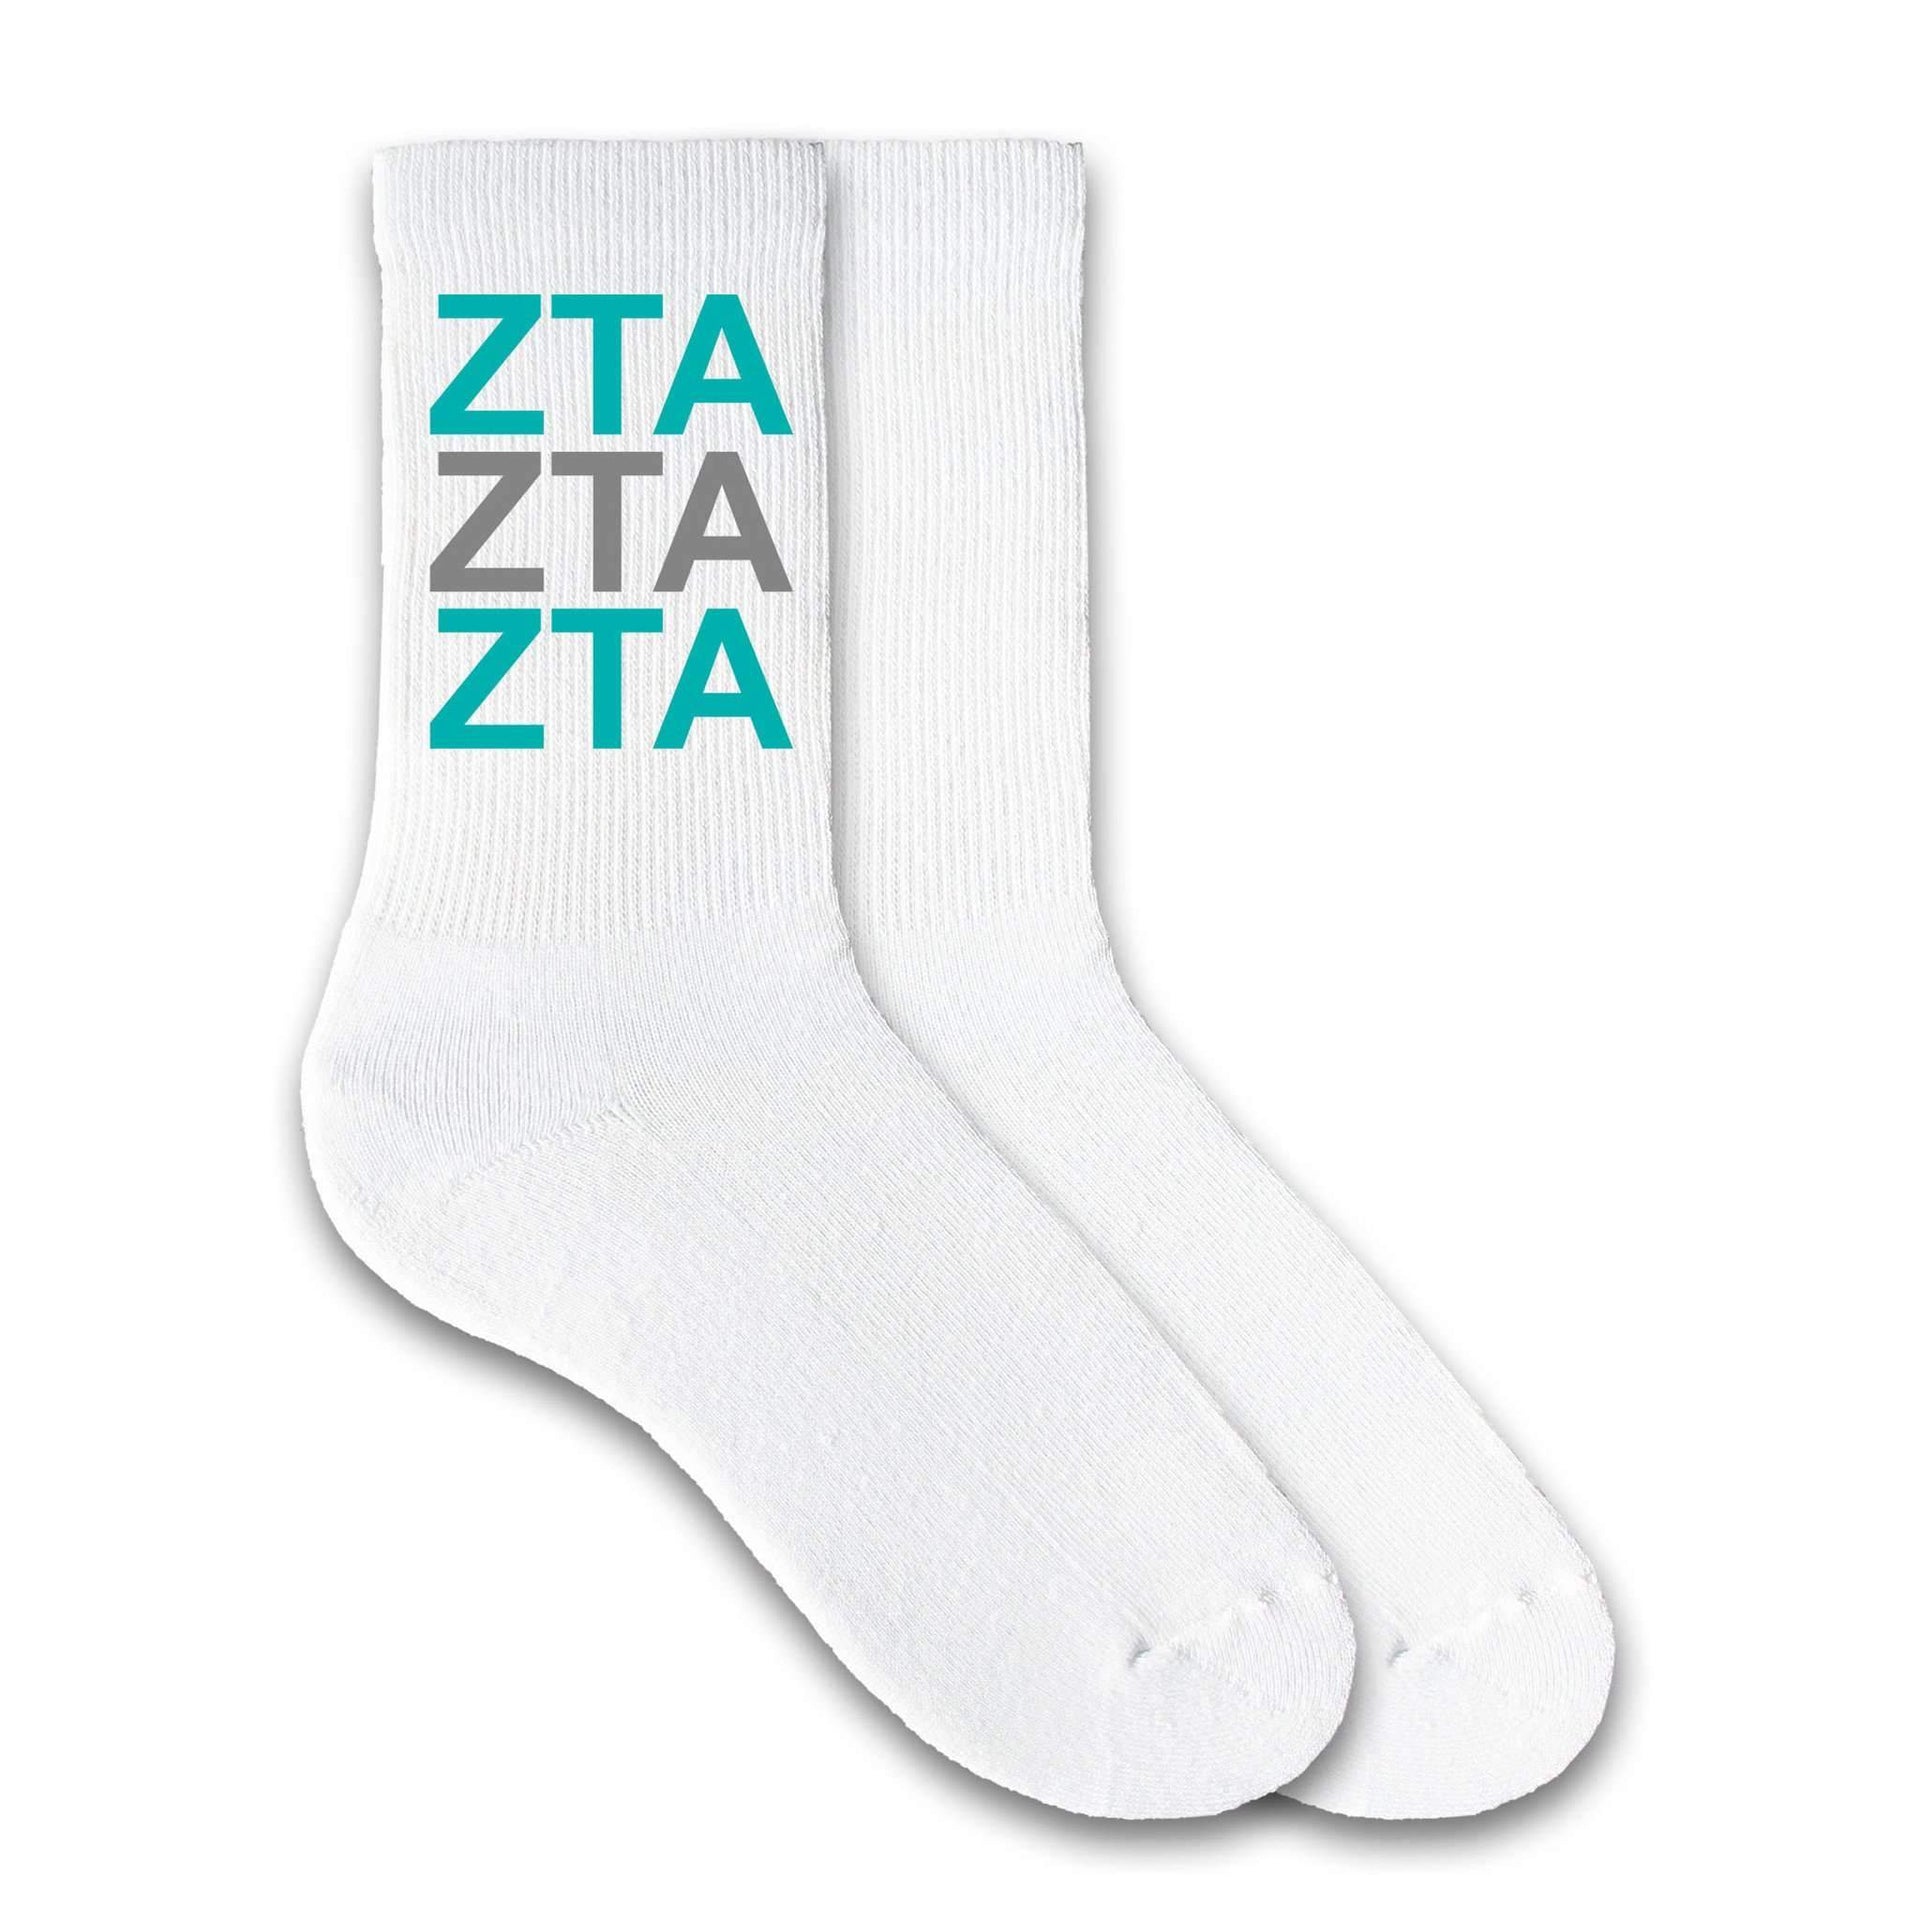 Zeta Tau Alpha sorority letters custom printed on white cotton crew socks